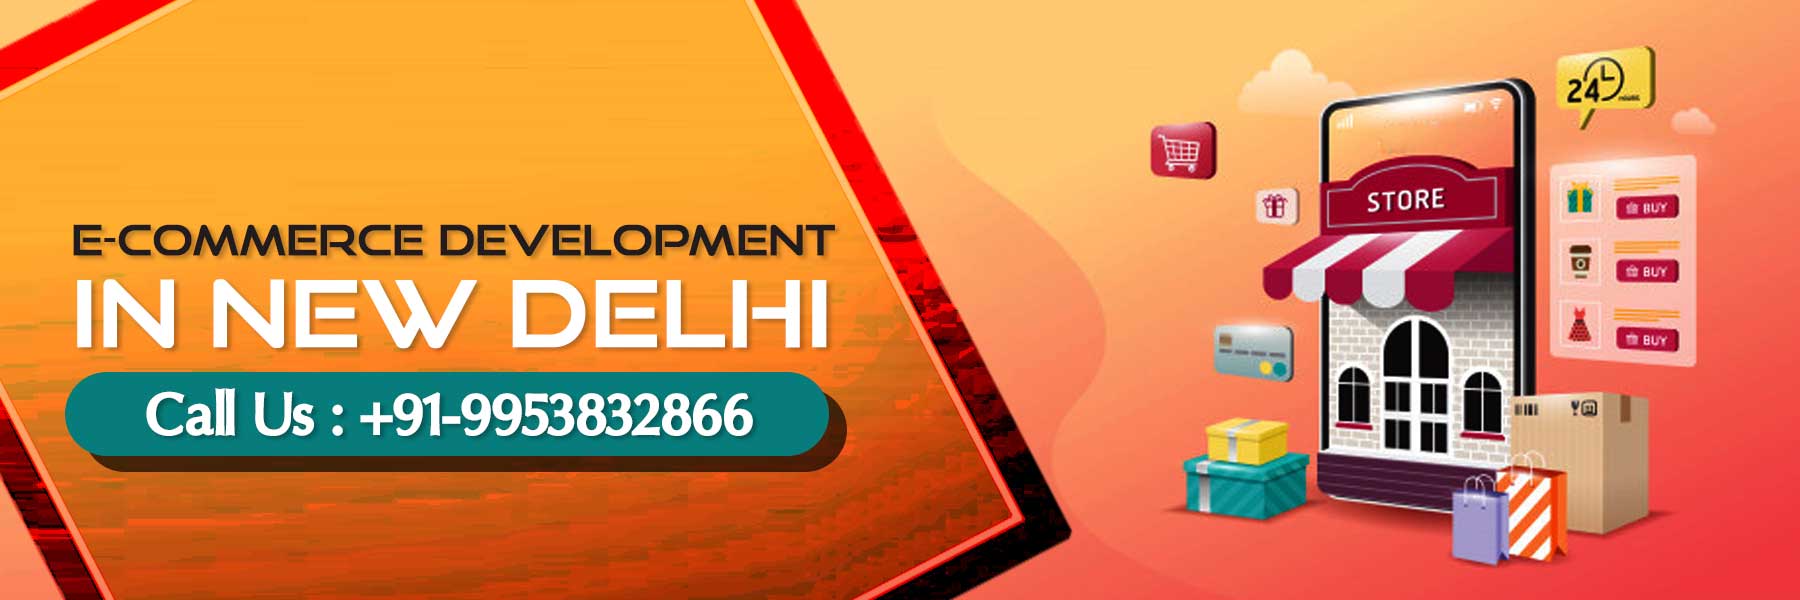 ecommerce development in New Delhi